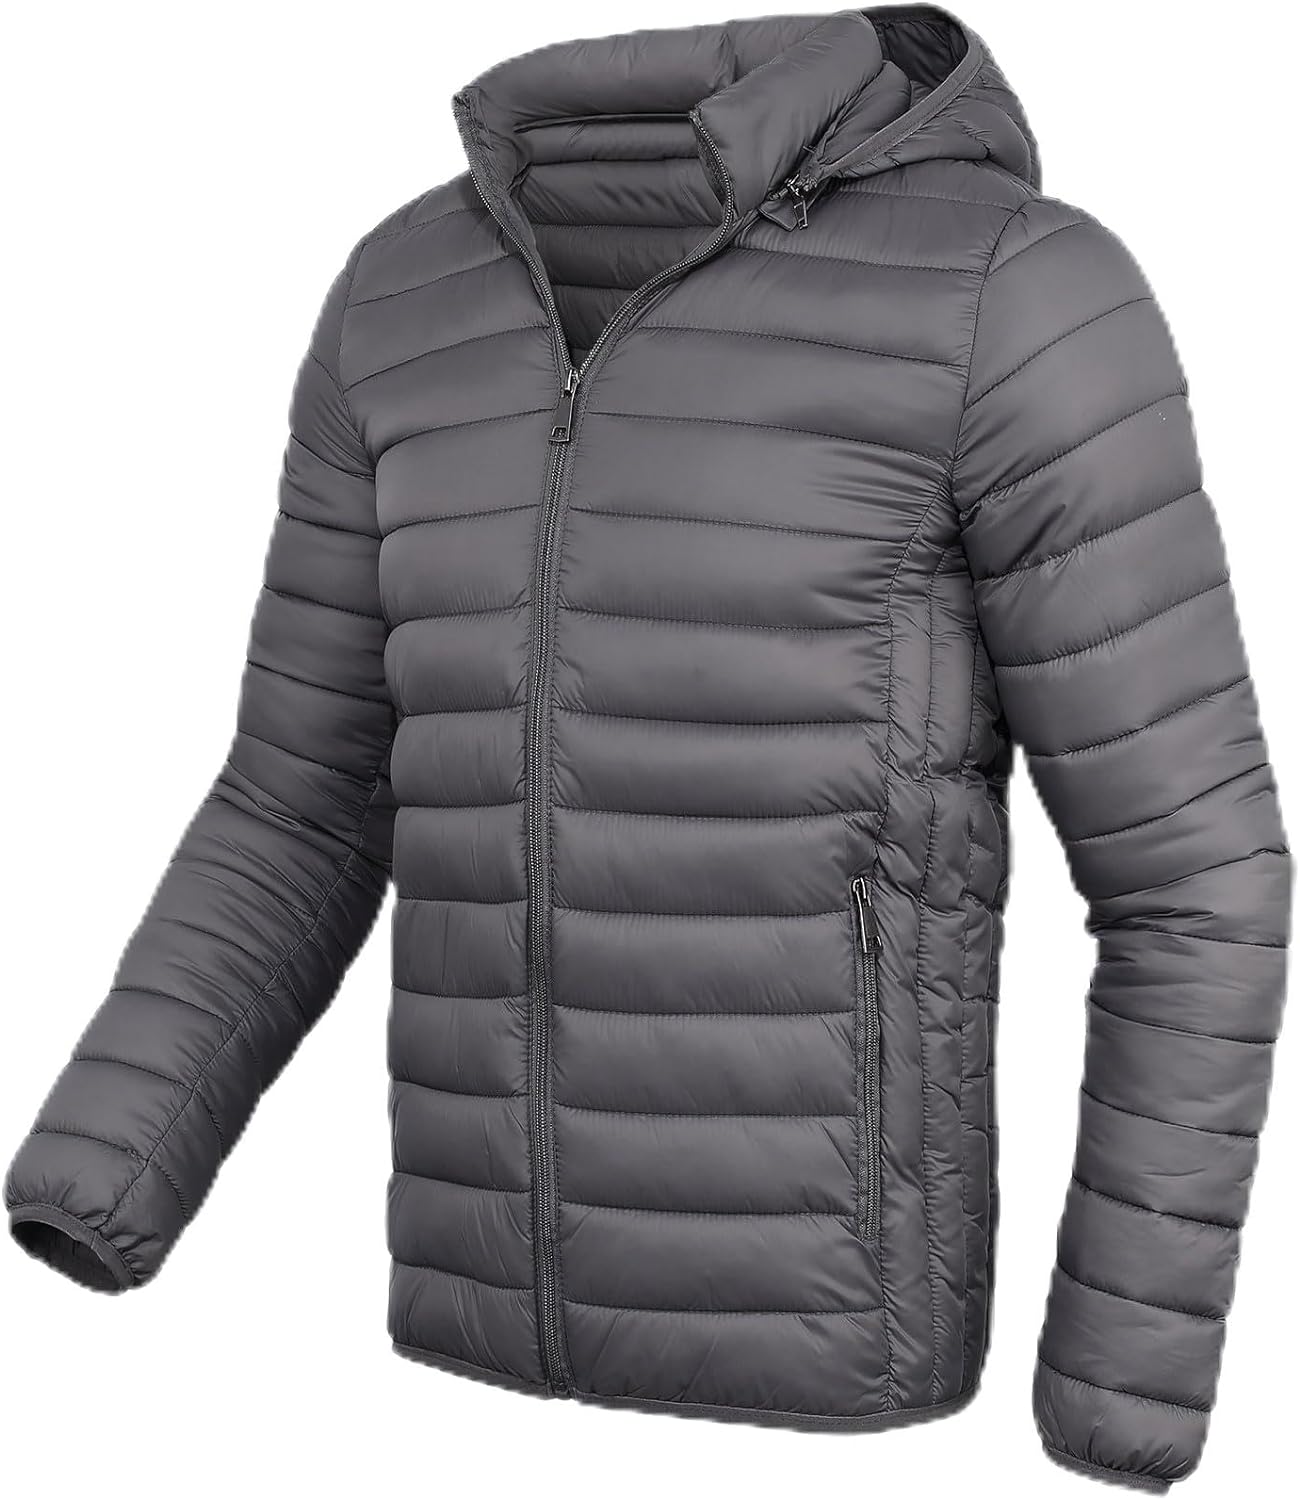 LAPASA Men's Lightweight Packable Down Jacket Hooded Outdoor Reaction  Winter Coat Water-Resistant M32 M54